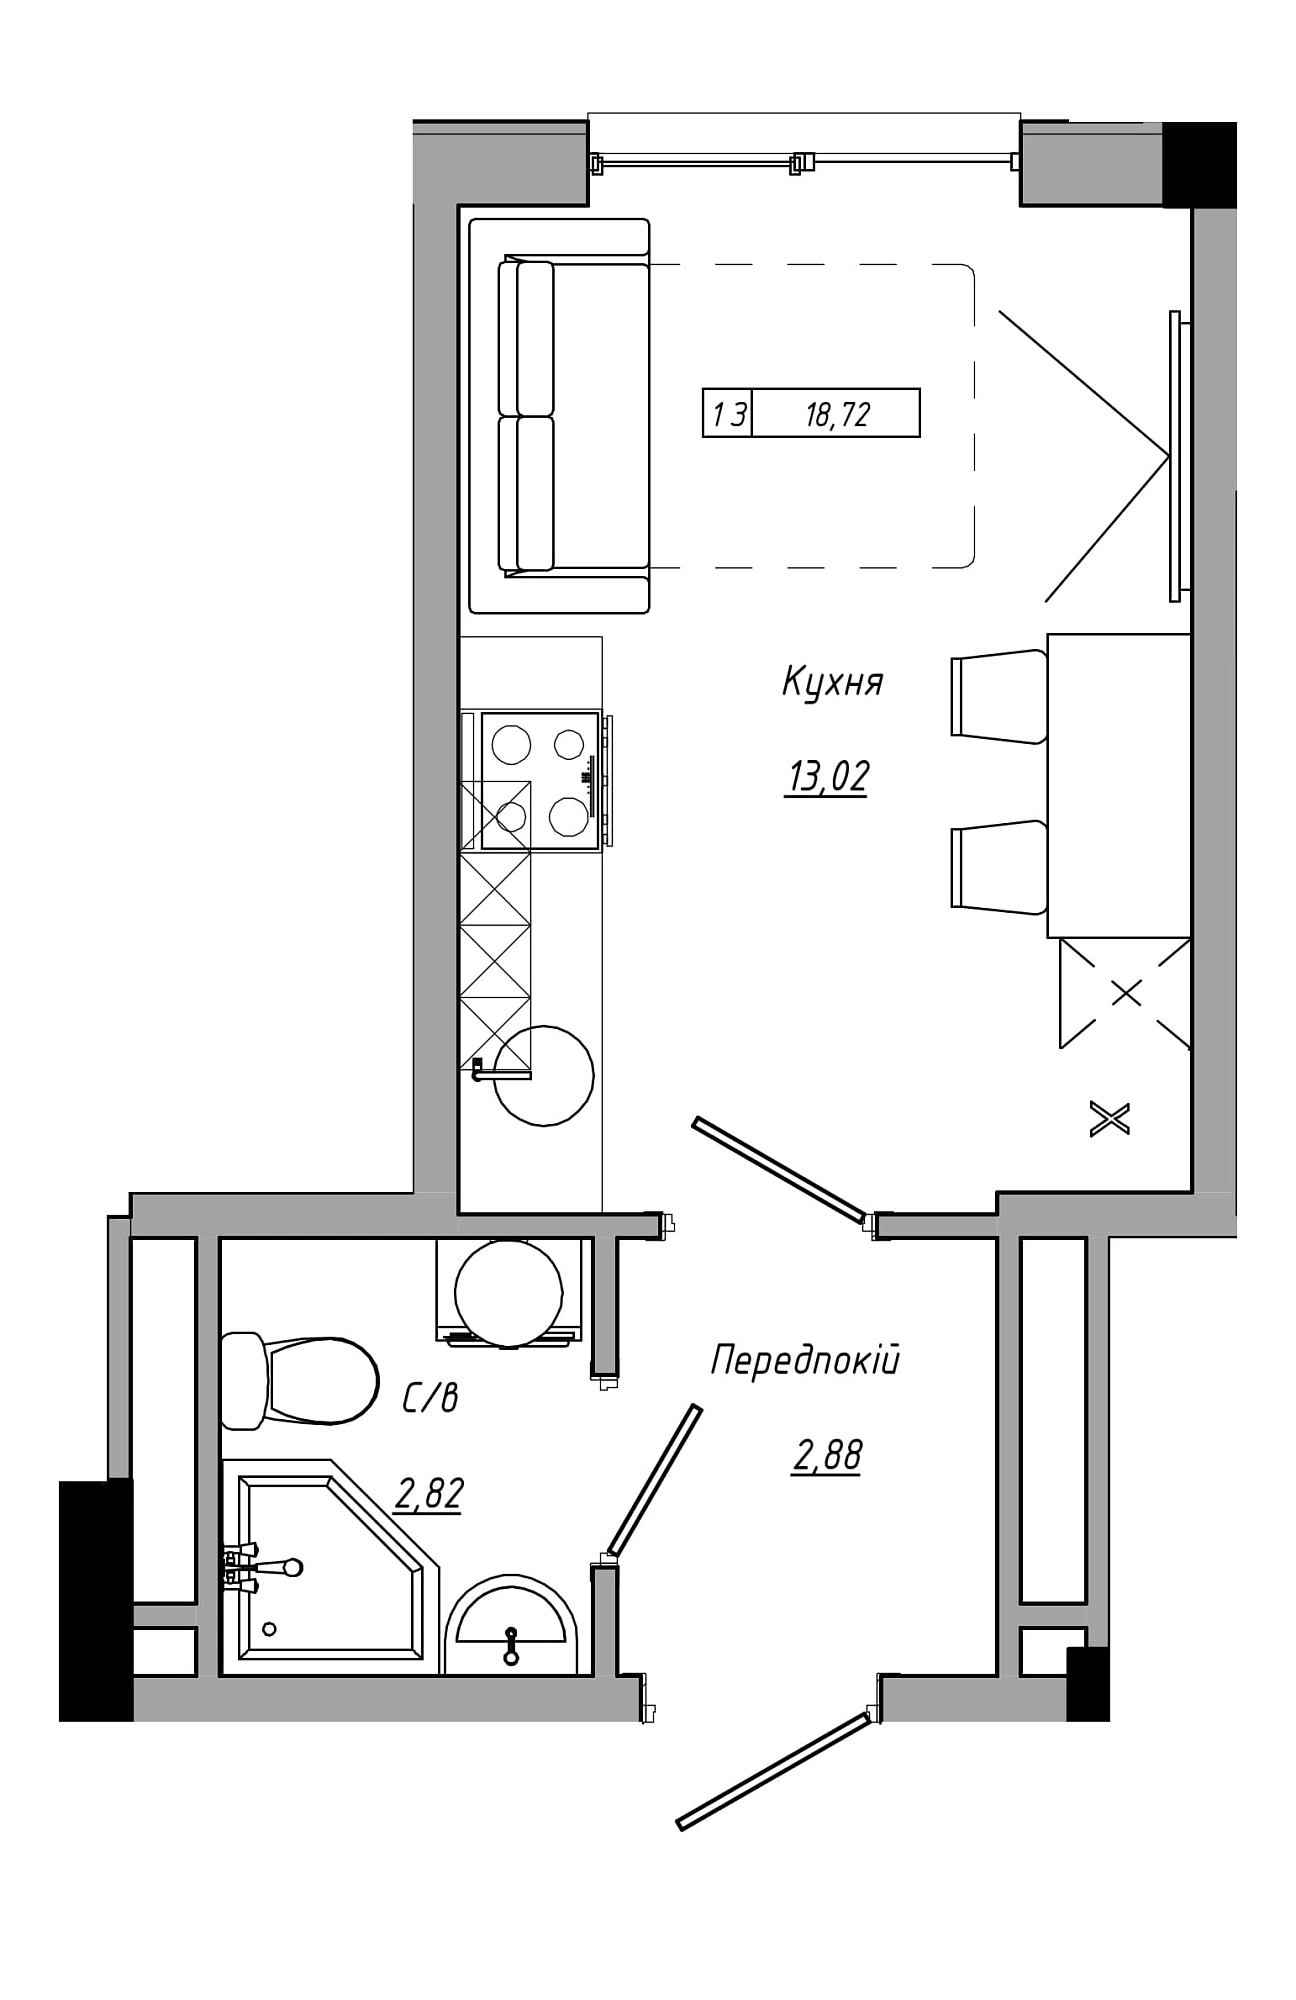 Planning Smart flats area 18.72m2, AB-21-14/00111.